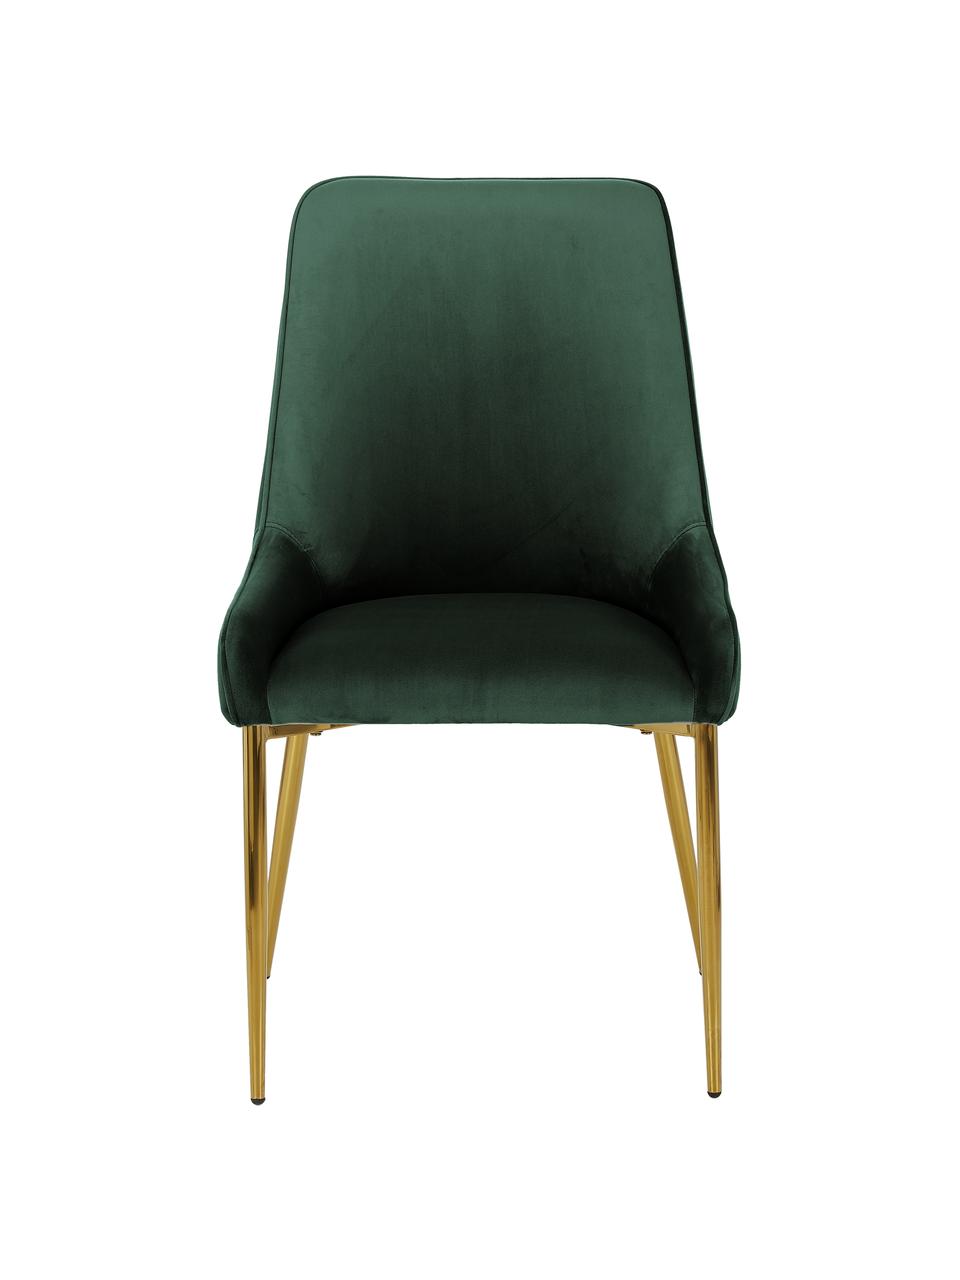 Fluwelen stoel Ava in donkergroen, Bekleding: fluweel (100% polyester), Poten: gegalvaniseerd metaal, Fluweel donkergroen, B 53 x D 60 cm